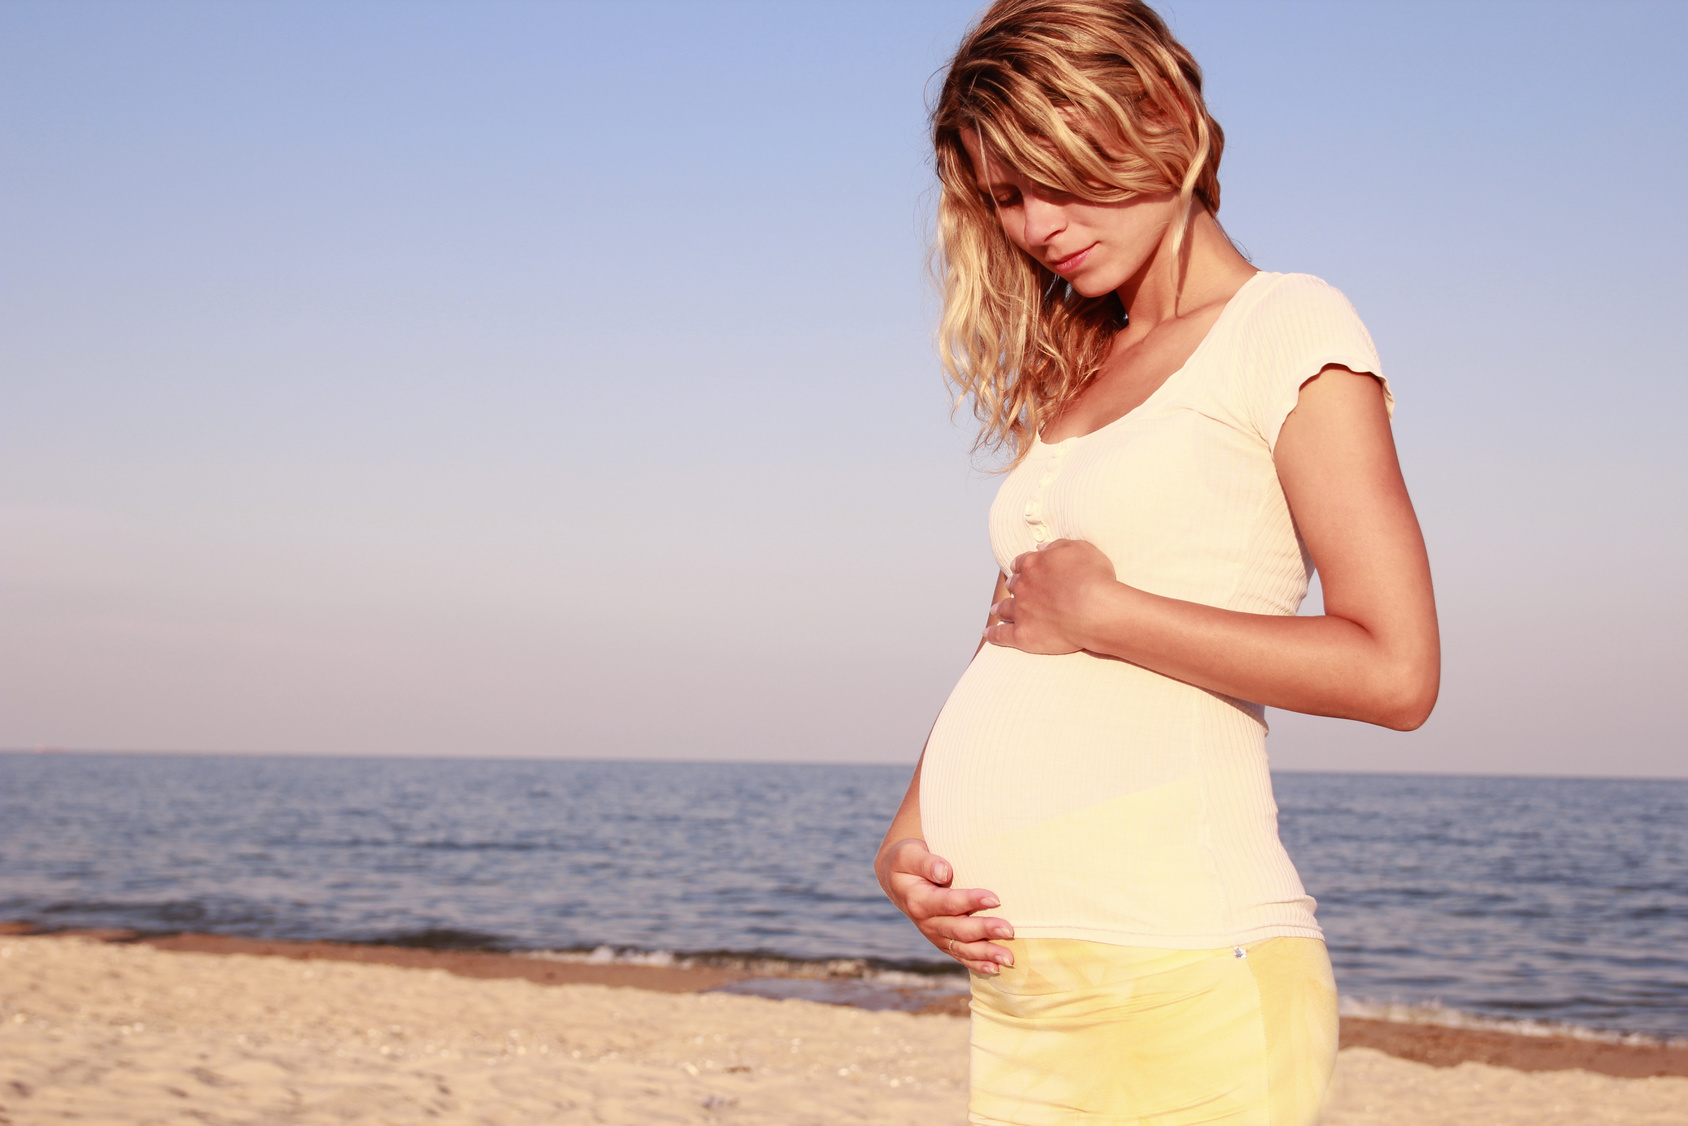 Pregnant woman on seashore